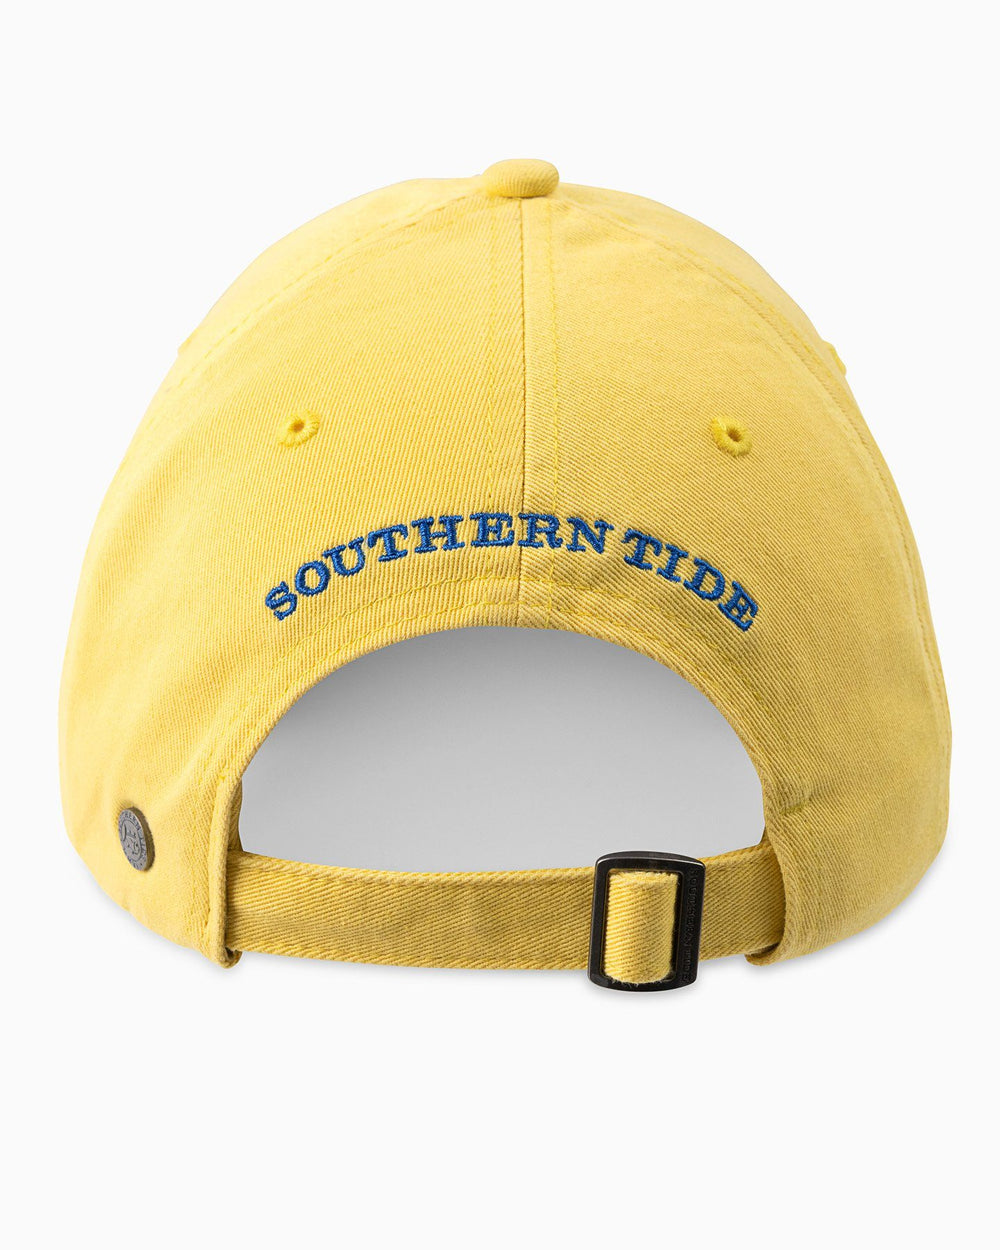 The back of the Skipjack Hat by Southern Tide - Sunshine